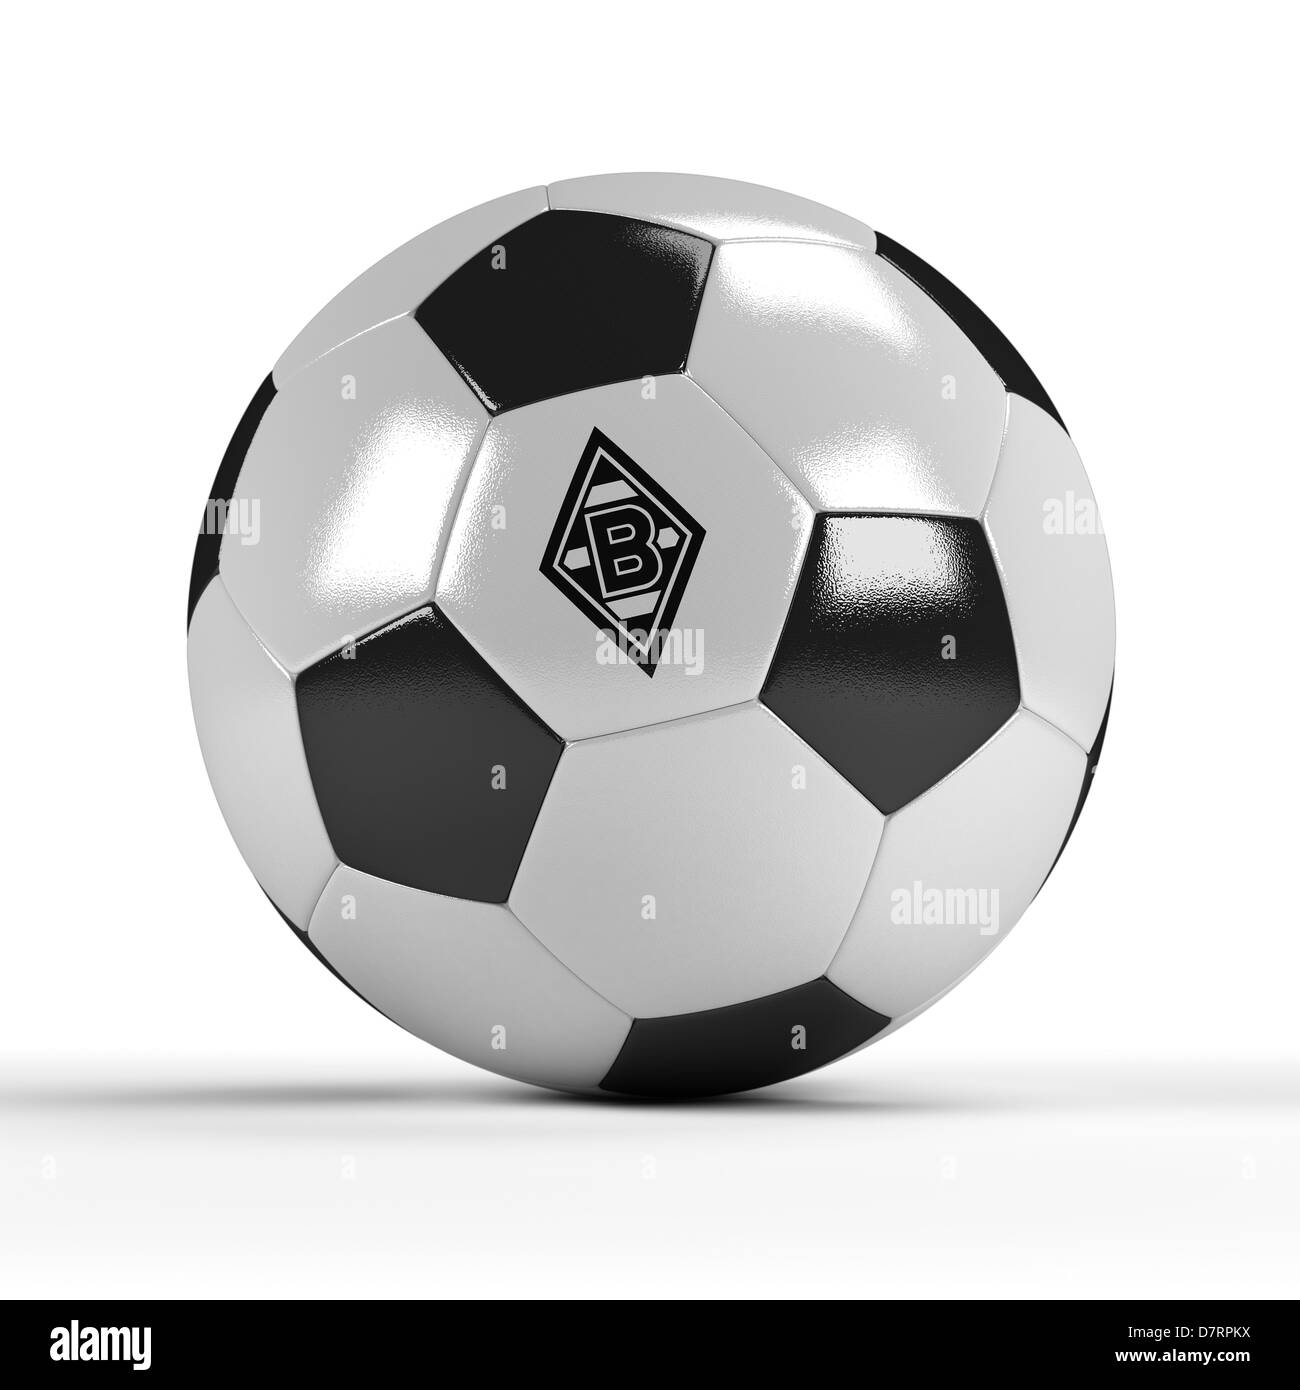 VfL Borussia Mönchengladbach soccer ball Stock Photo